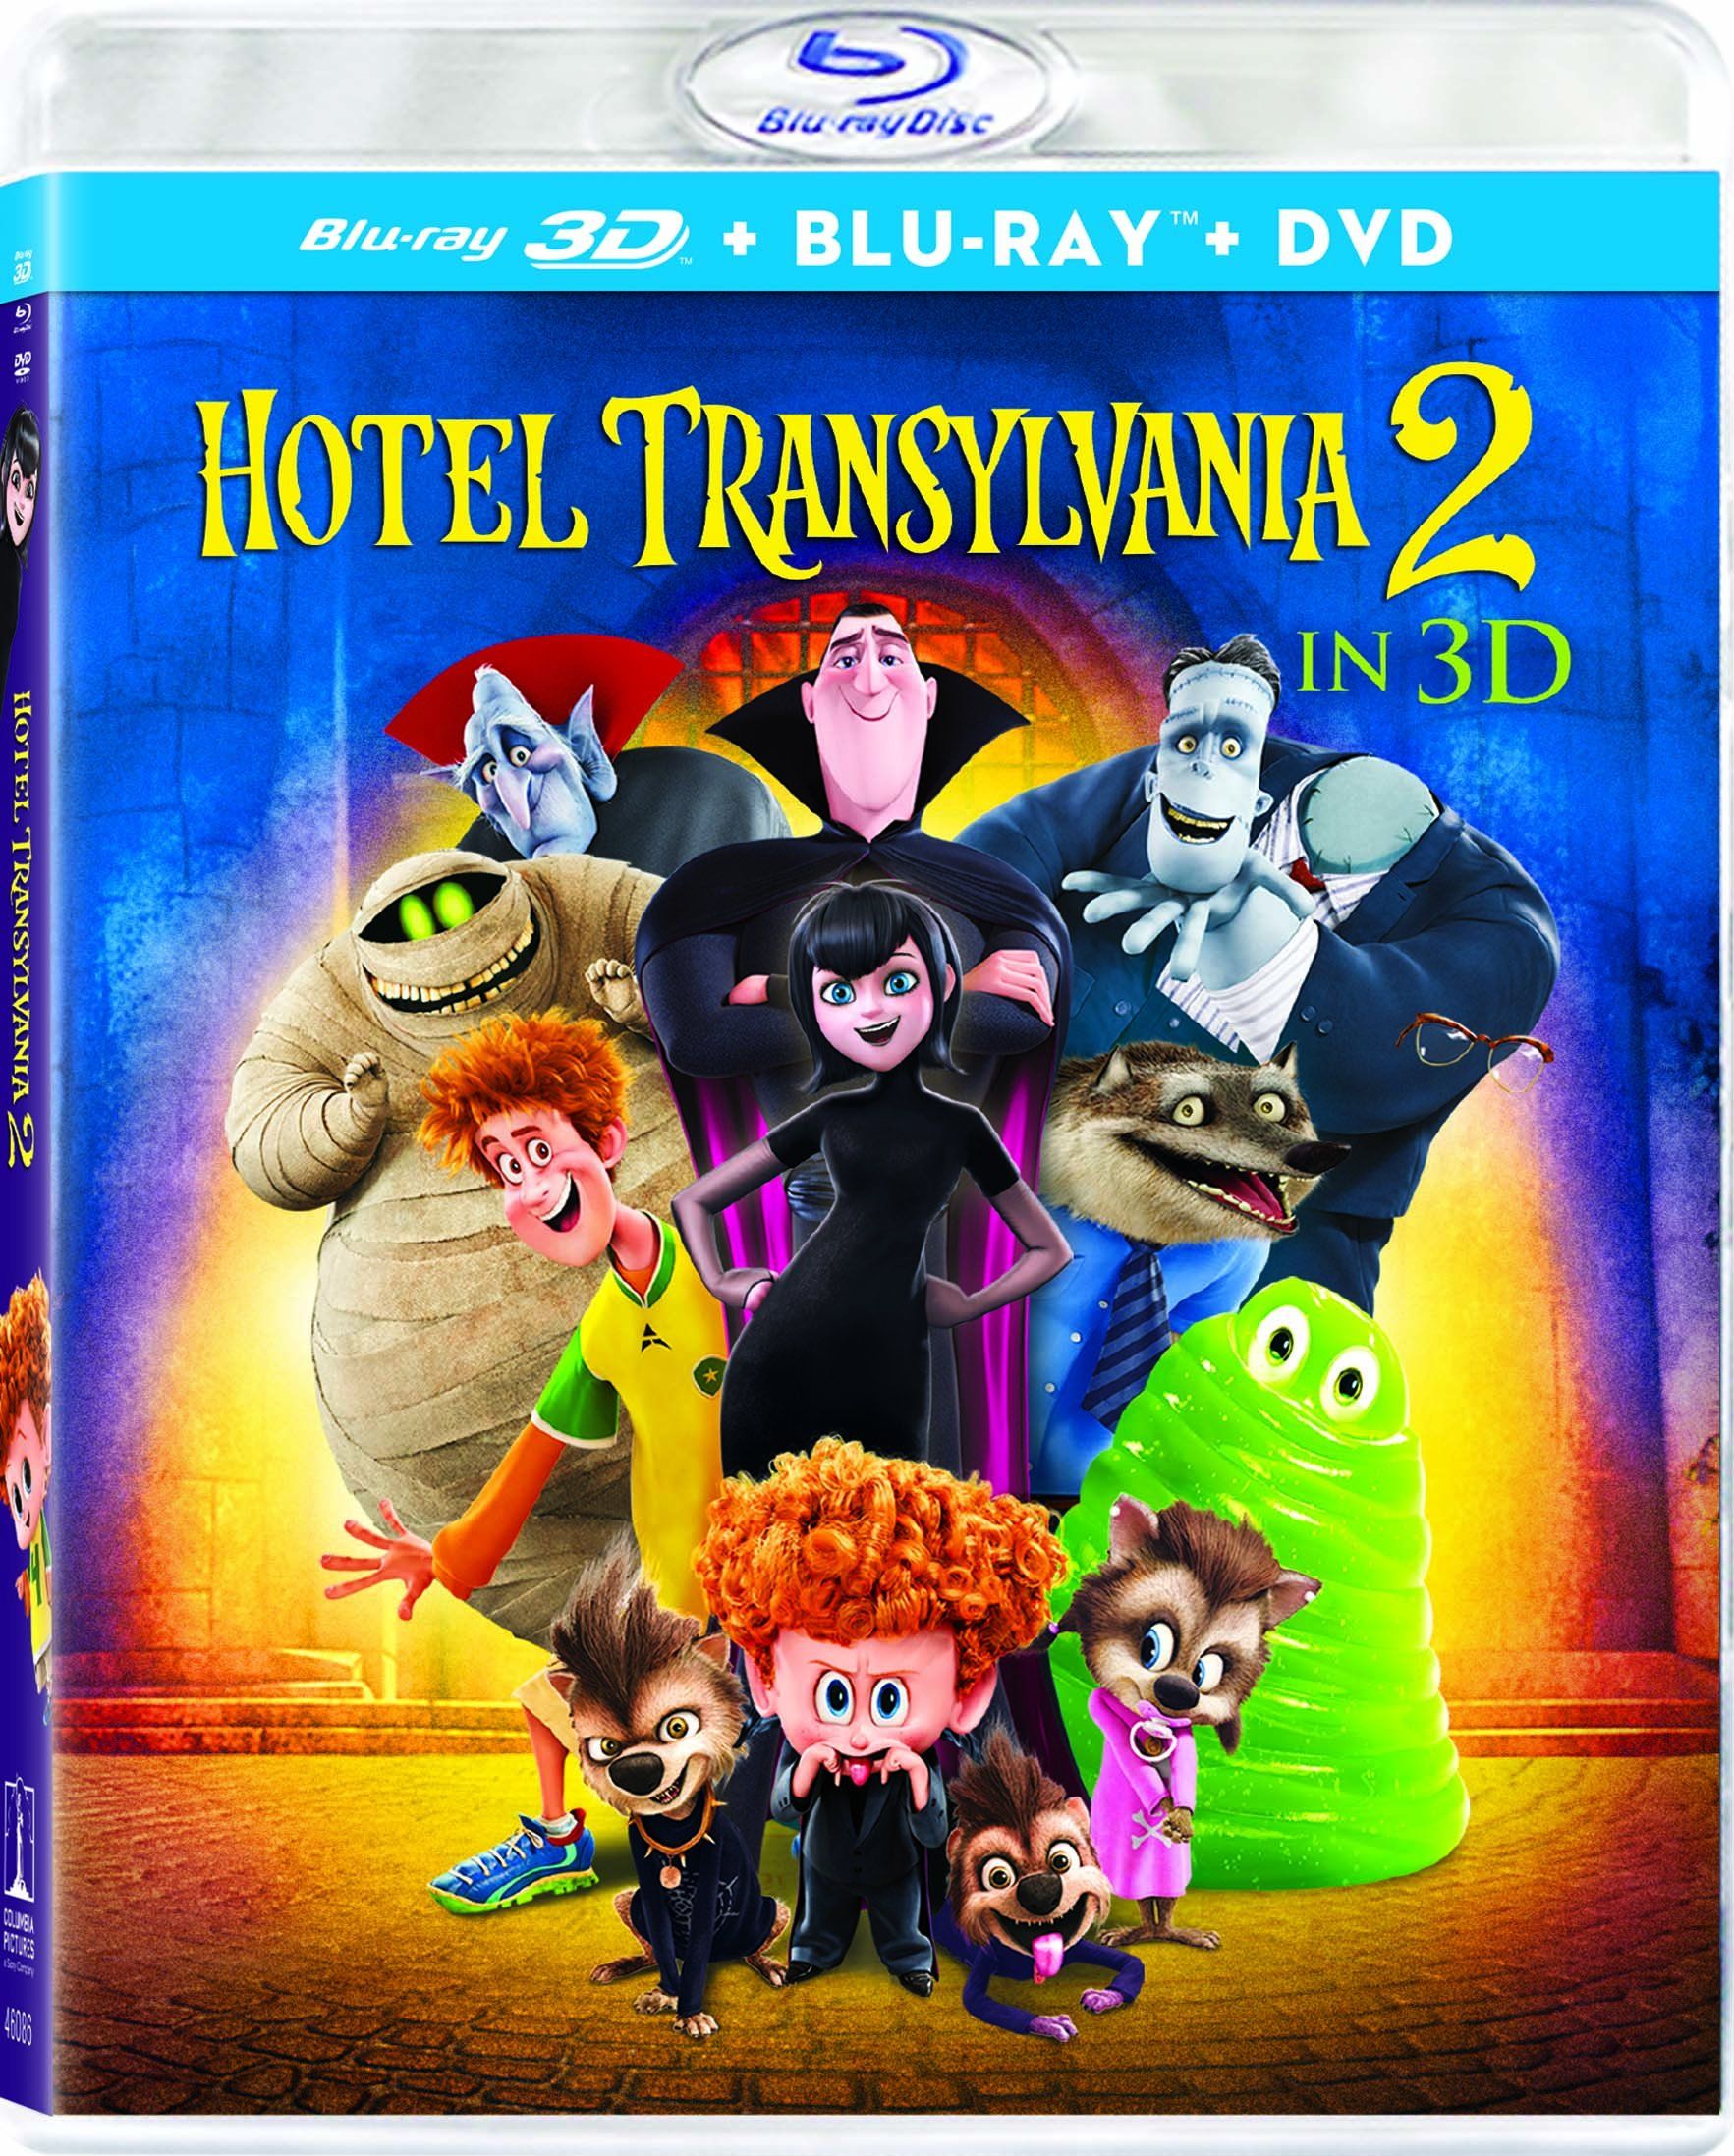 Hotel Transylvania 2 DVD Release Date January 12, 2016